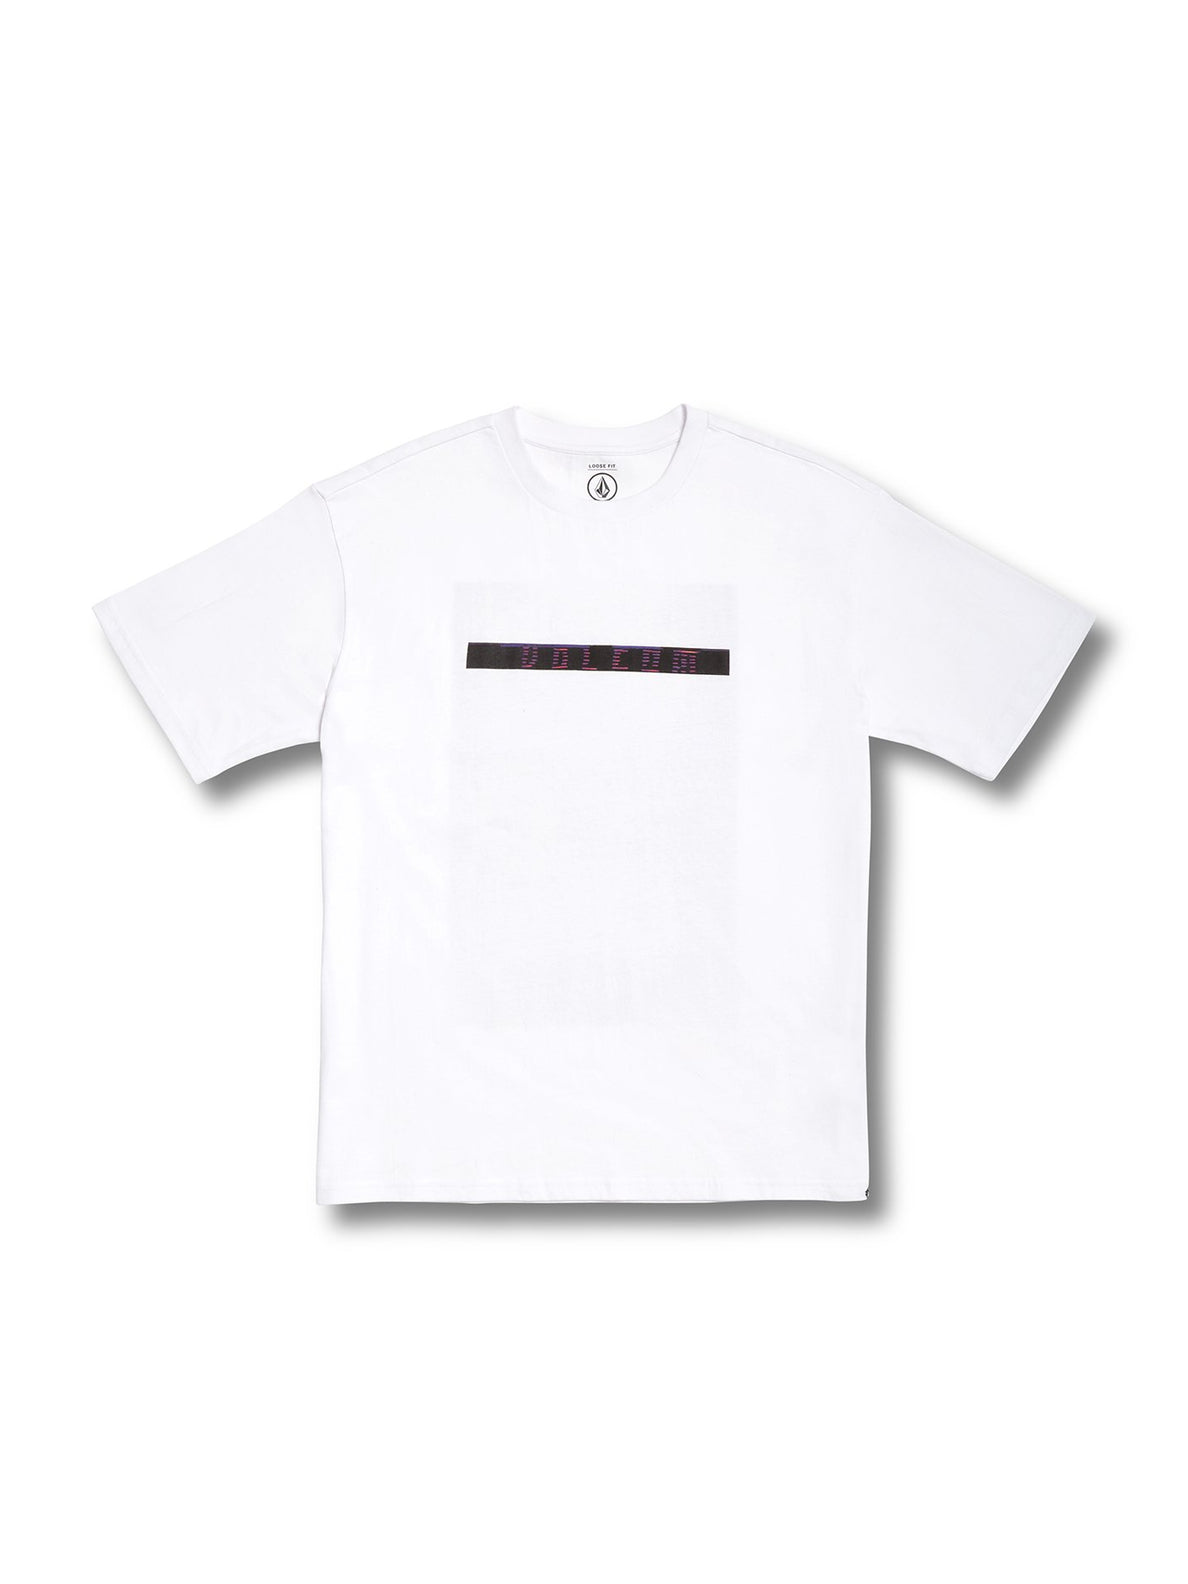 Flowscillator T-shirt - WHITE (A4332107_WHT) [30]